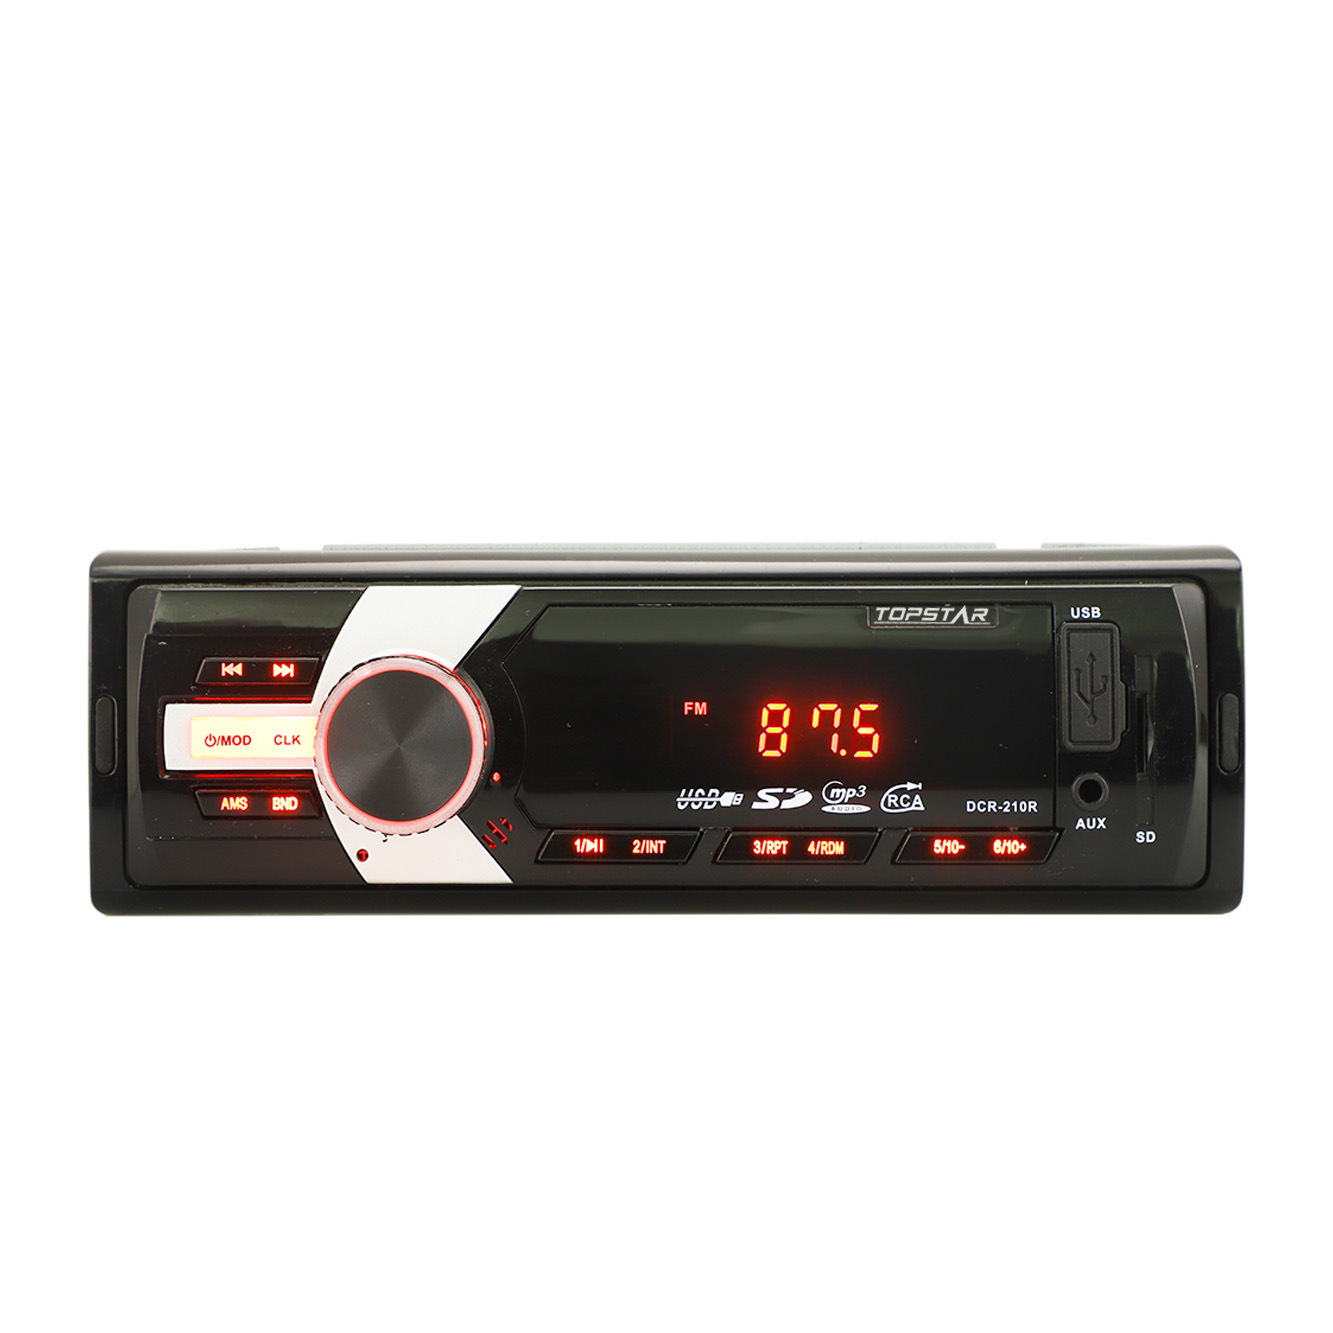 Auto Stereo Car Video Player MP3 for Car Car Stereo Car Bluetooth FM Radio USB Multimedia MP3 Audio Player